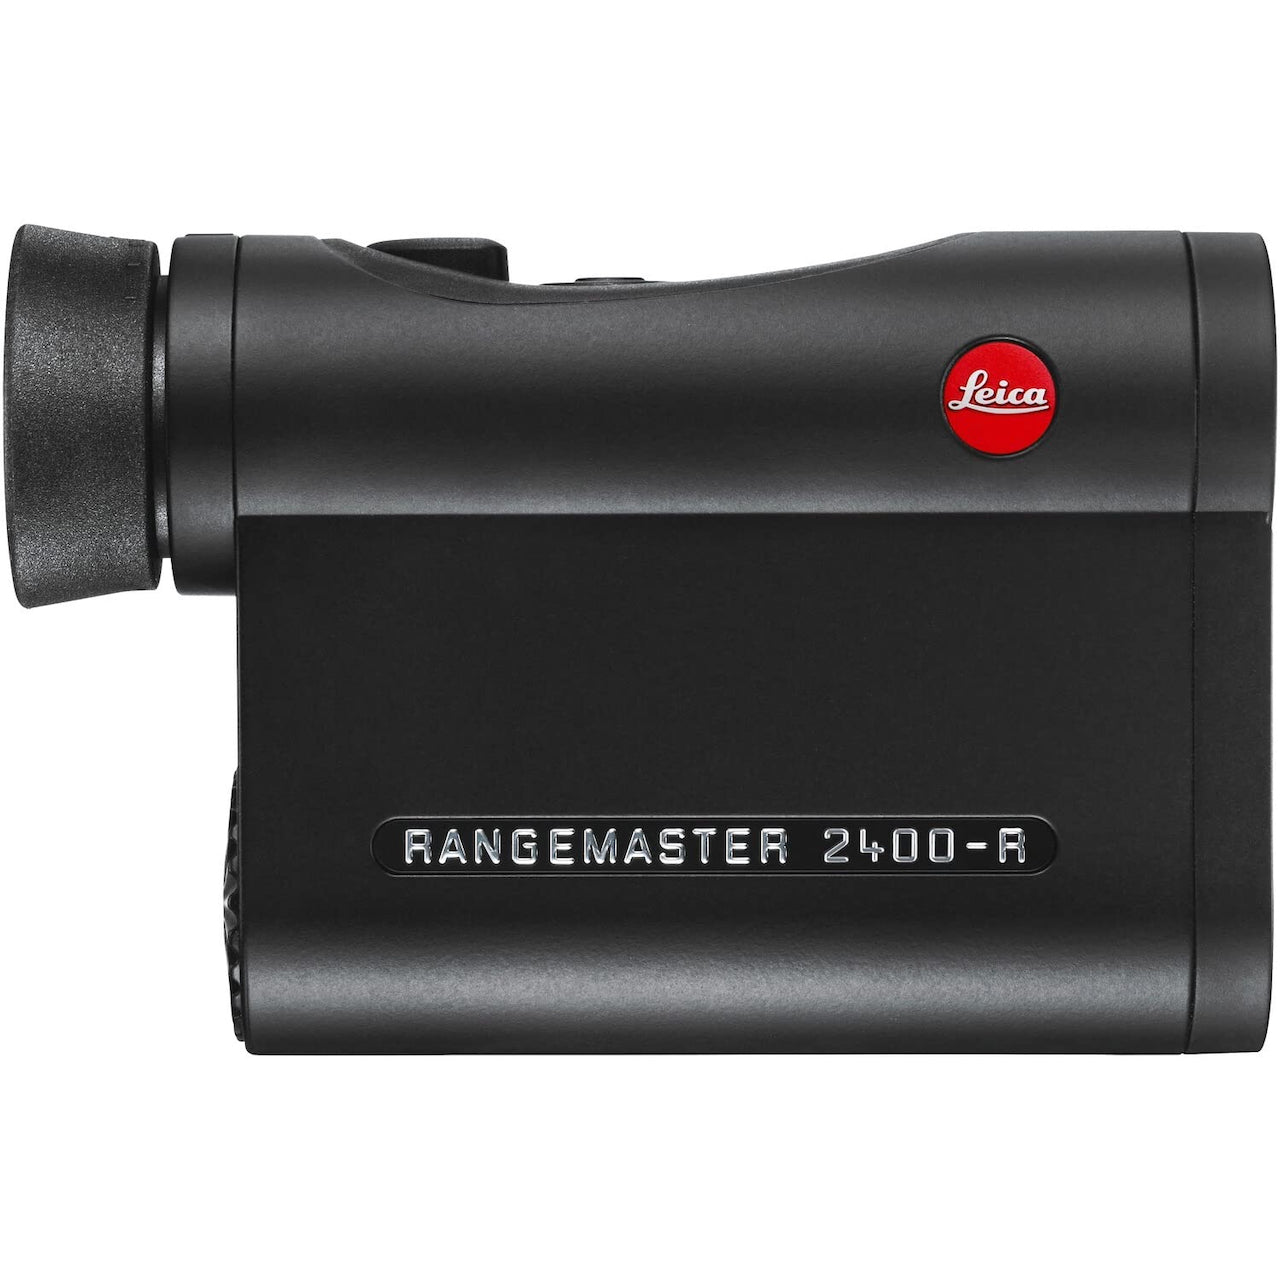 Leica Rangemaster CRF 2400-R - Shooting Warehouse